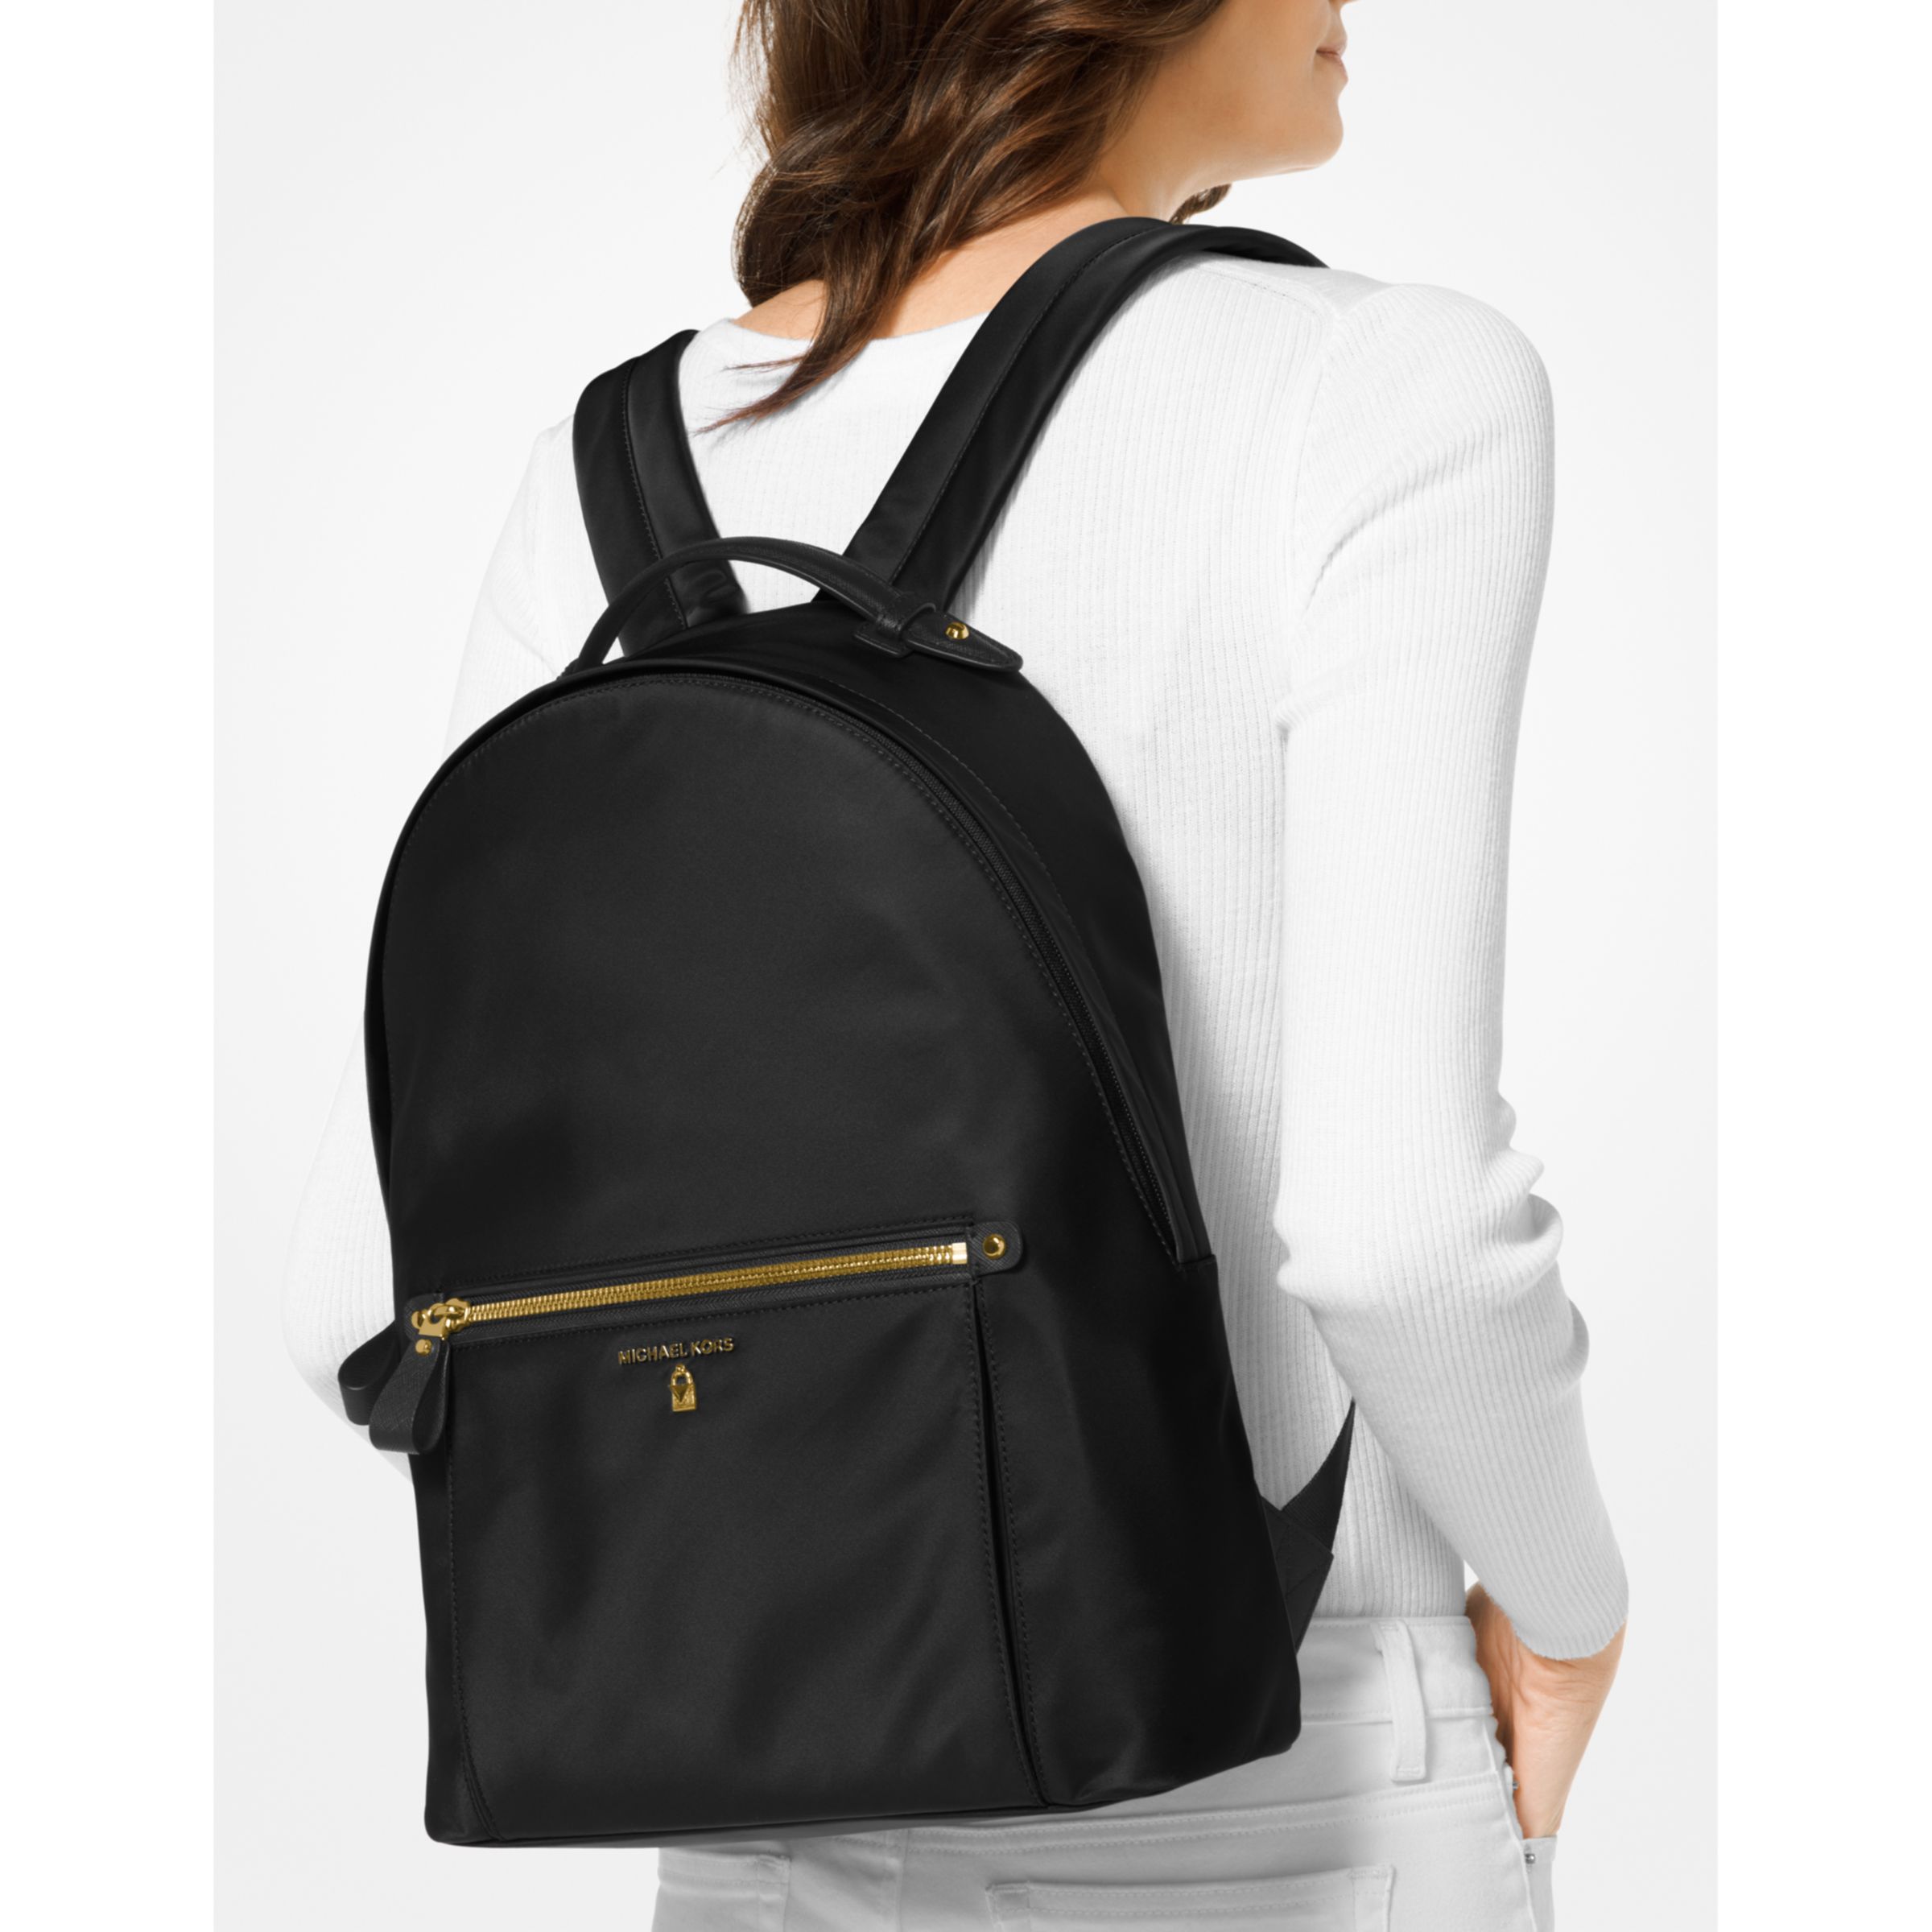 mk kelsey backpack